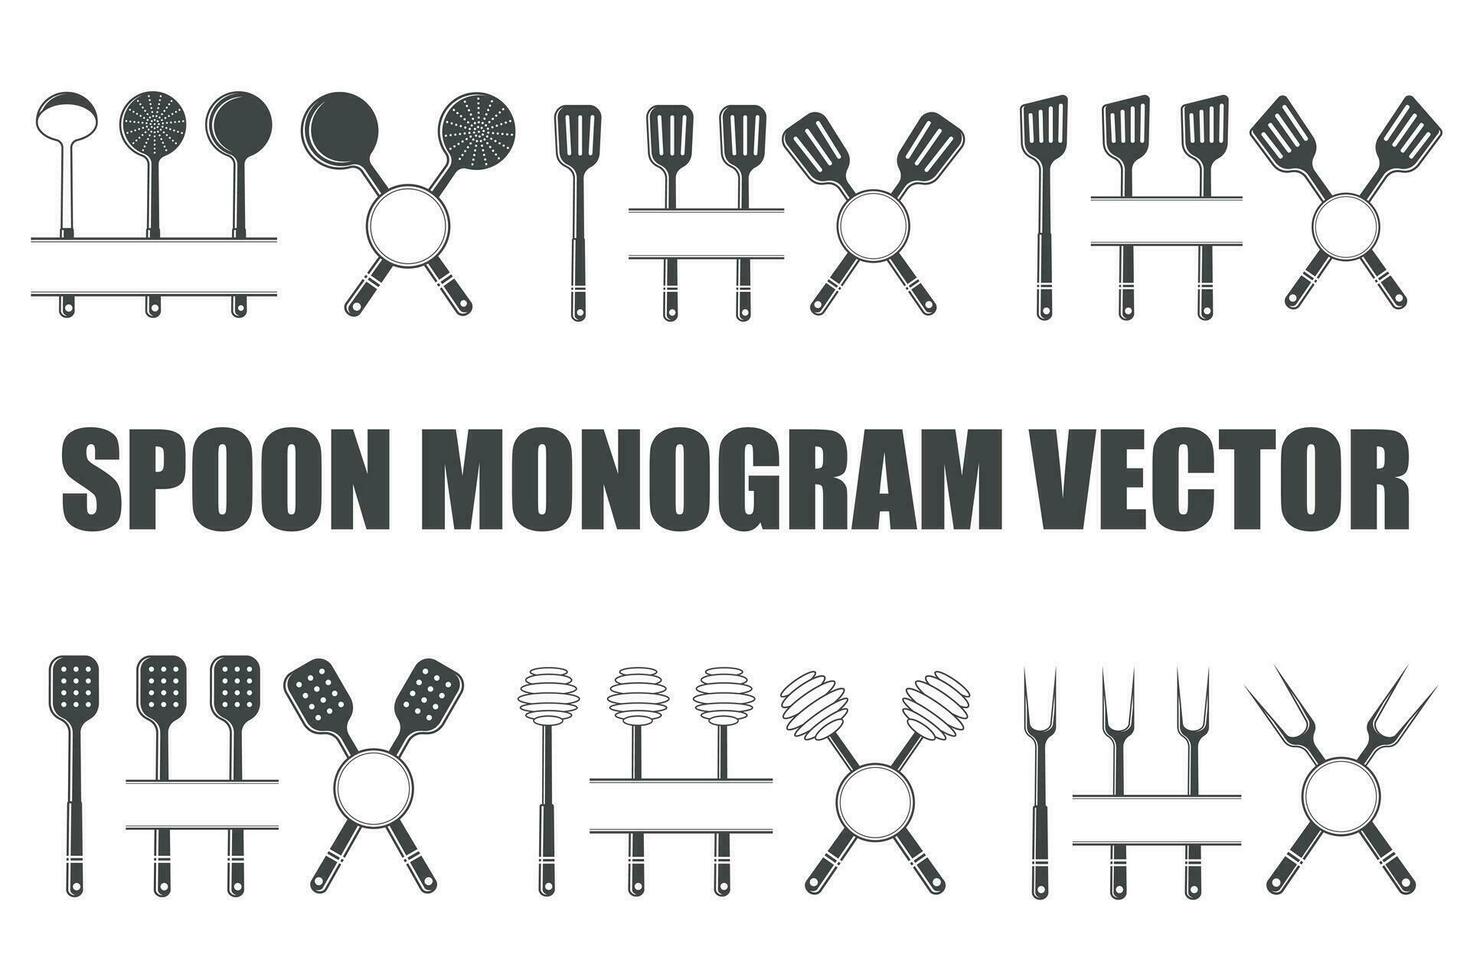 cuchillo monograma vector, cuchara silueta, pastel rebanador vecotr, cuchillo vector, restaurante equipo, acortar arte, tenedor cuchara y cuchillo monograma, vector, ilustración vector